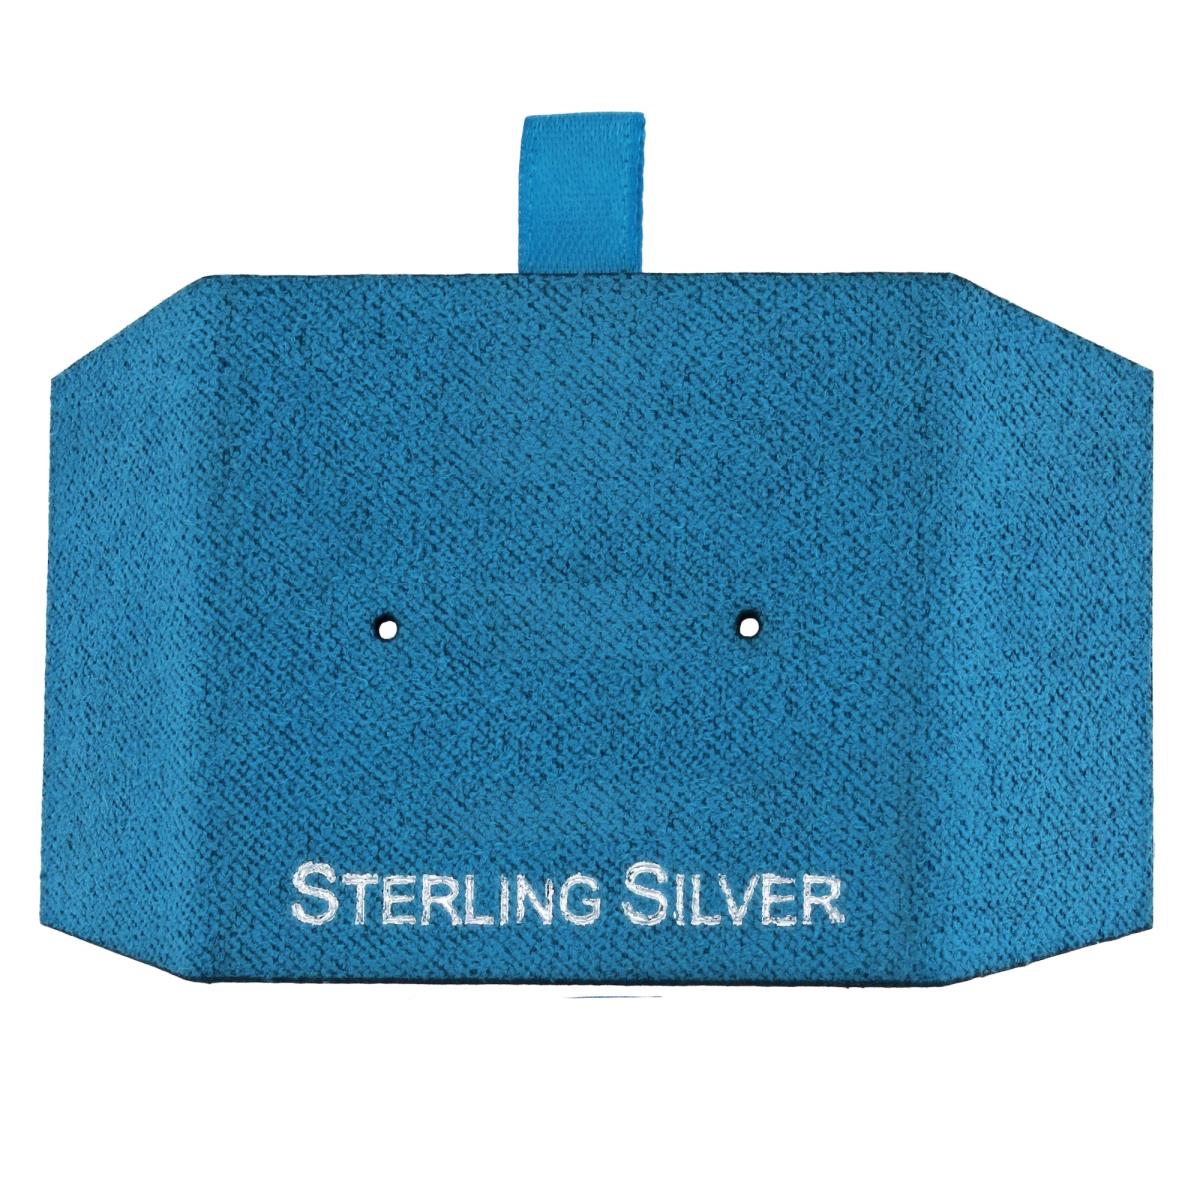 Teal Sterling Silver, Silver Foil Stud Insert (Box B06-159/Teal/D)